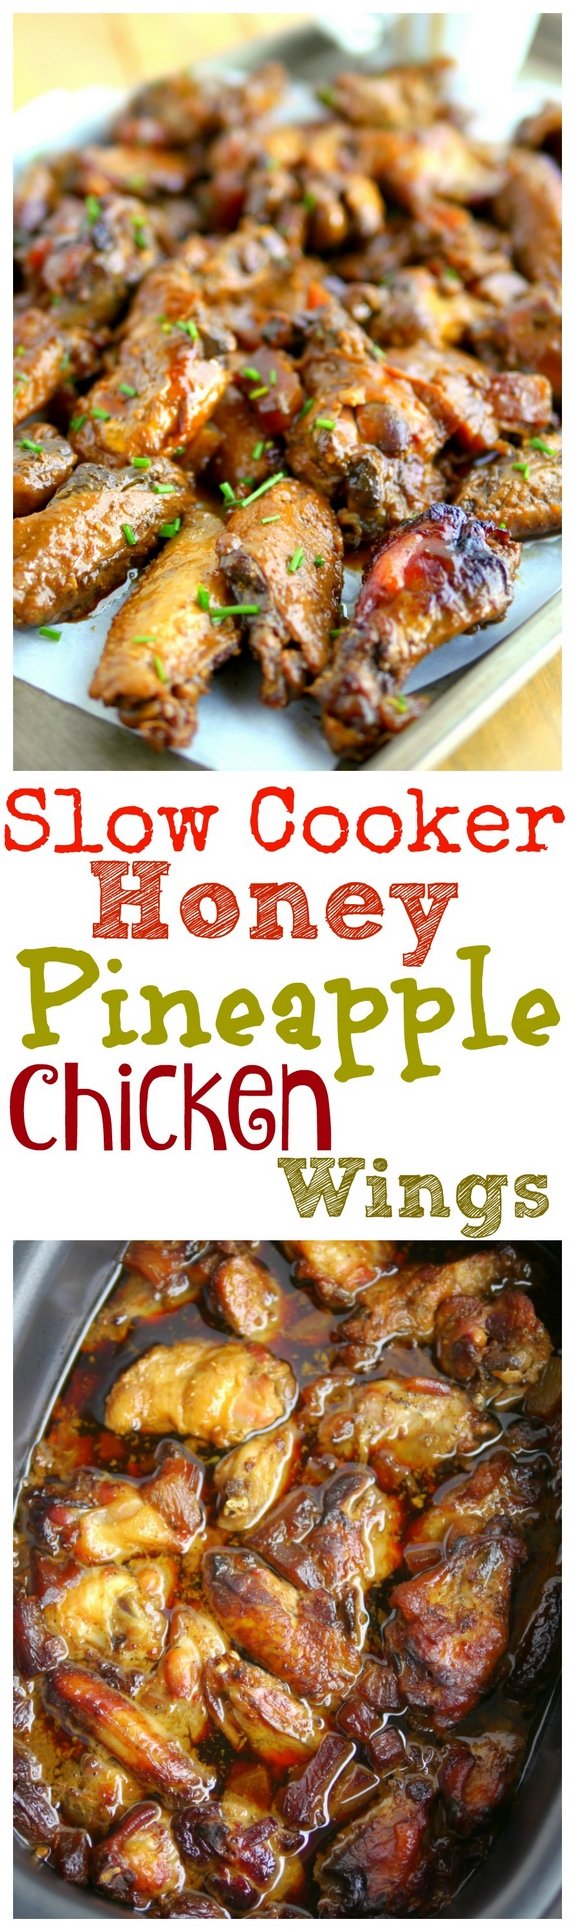 Slow Cooker Honey Pineapple Chicken Wings